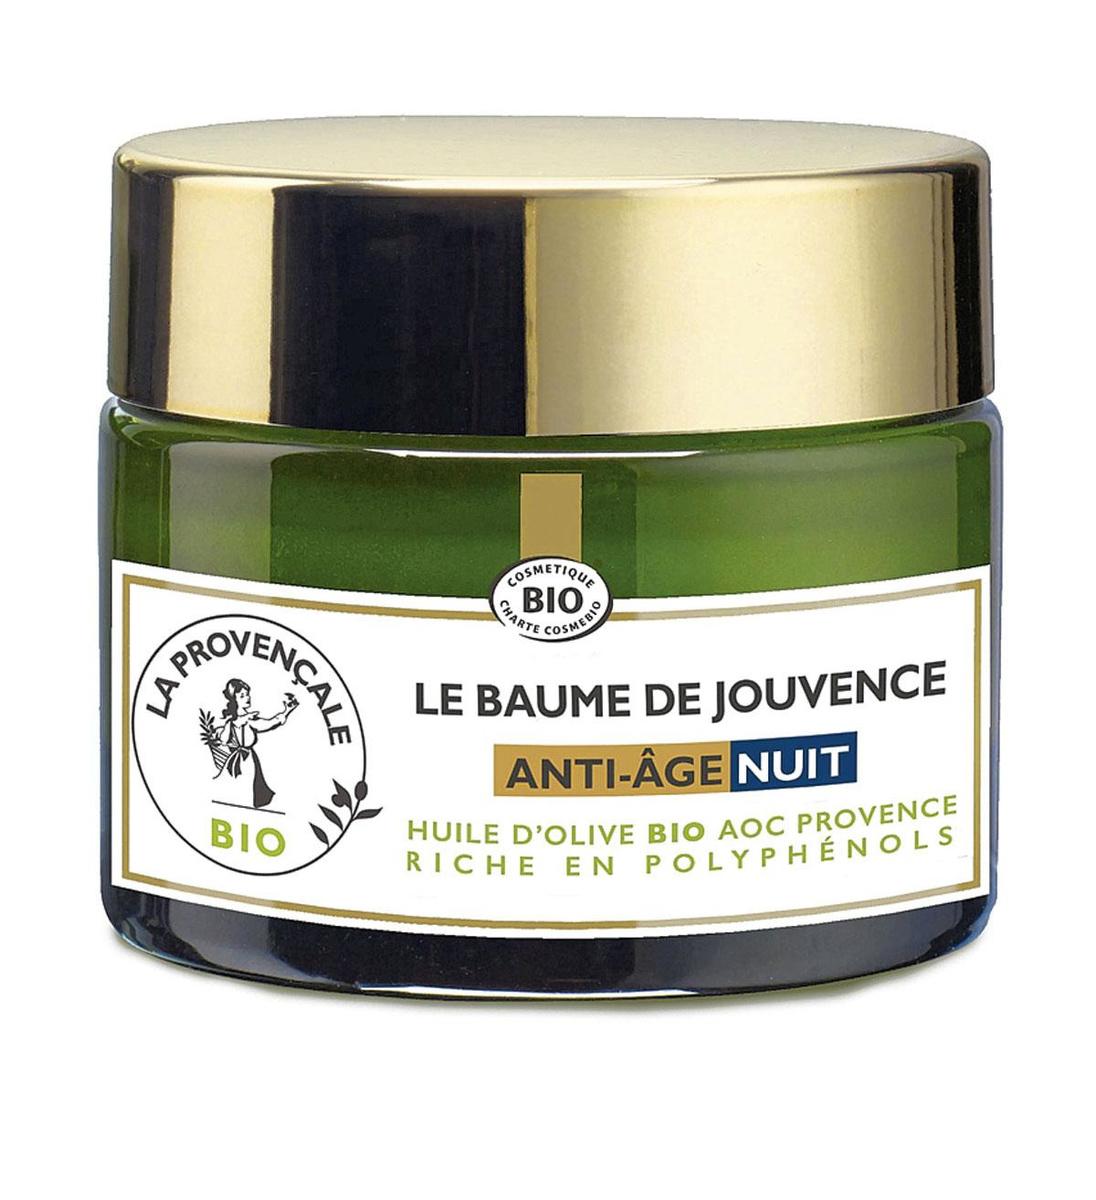 Le Baume de Jouvence Anti-Age Nuit zit vol olijfolie en polyfenolen. Om samen te smeren, voor je je in de armen van Morpheus nestelt. La Provençale, 16 euro, bij Di en Kruidvat.